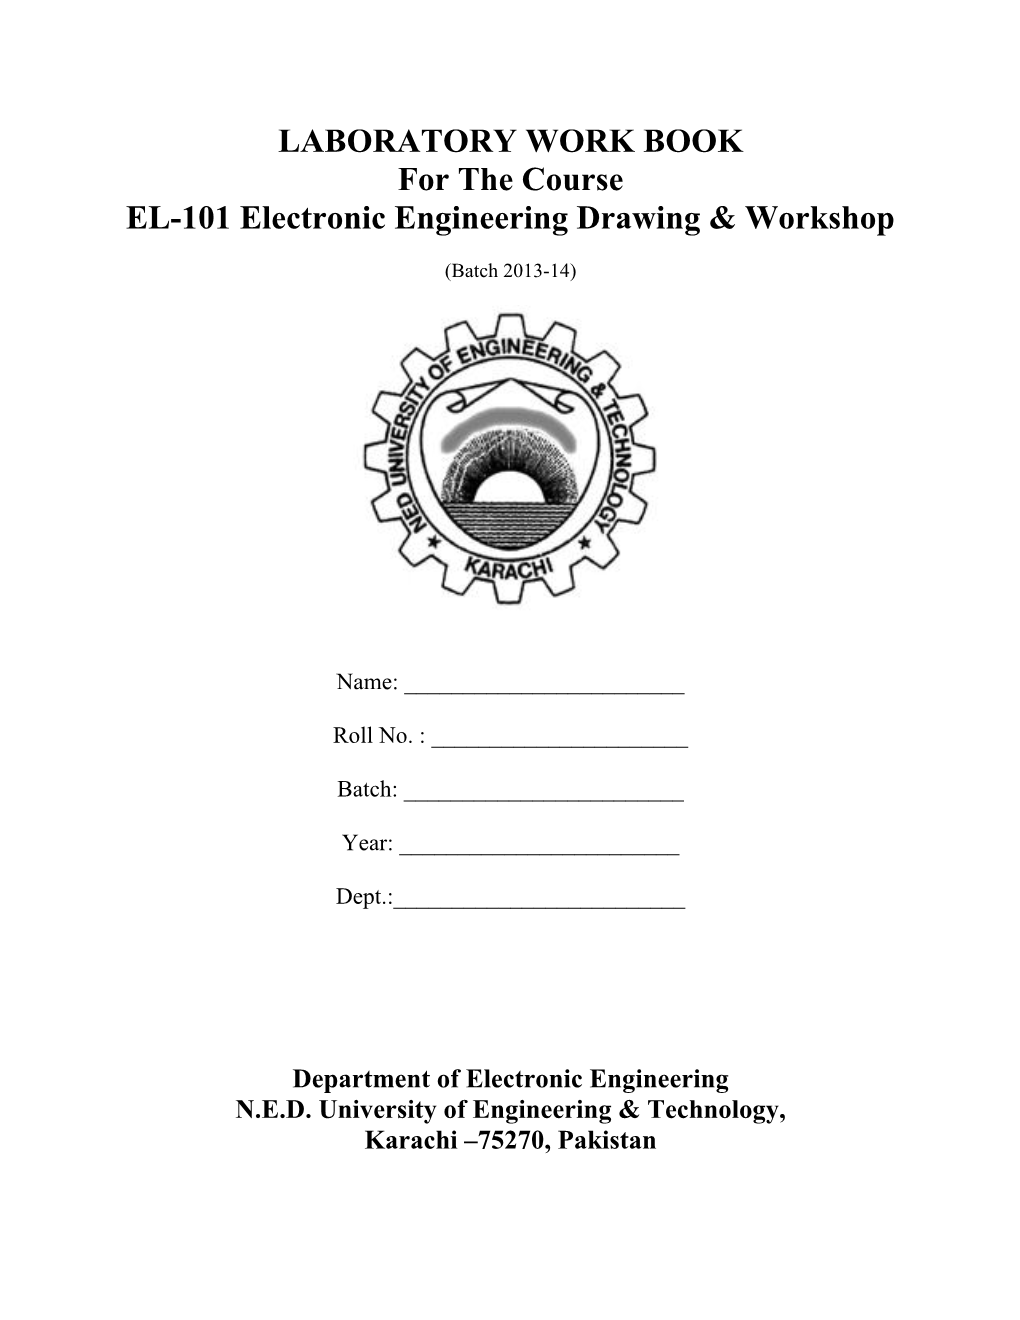 Electronic Engineering Drawing & Workshop